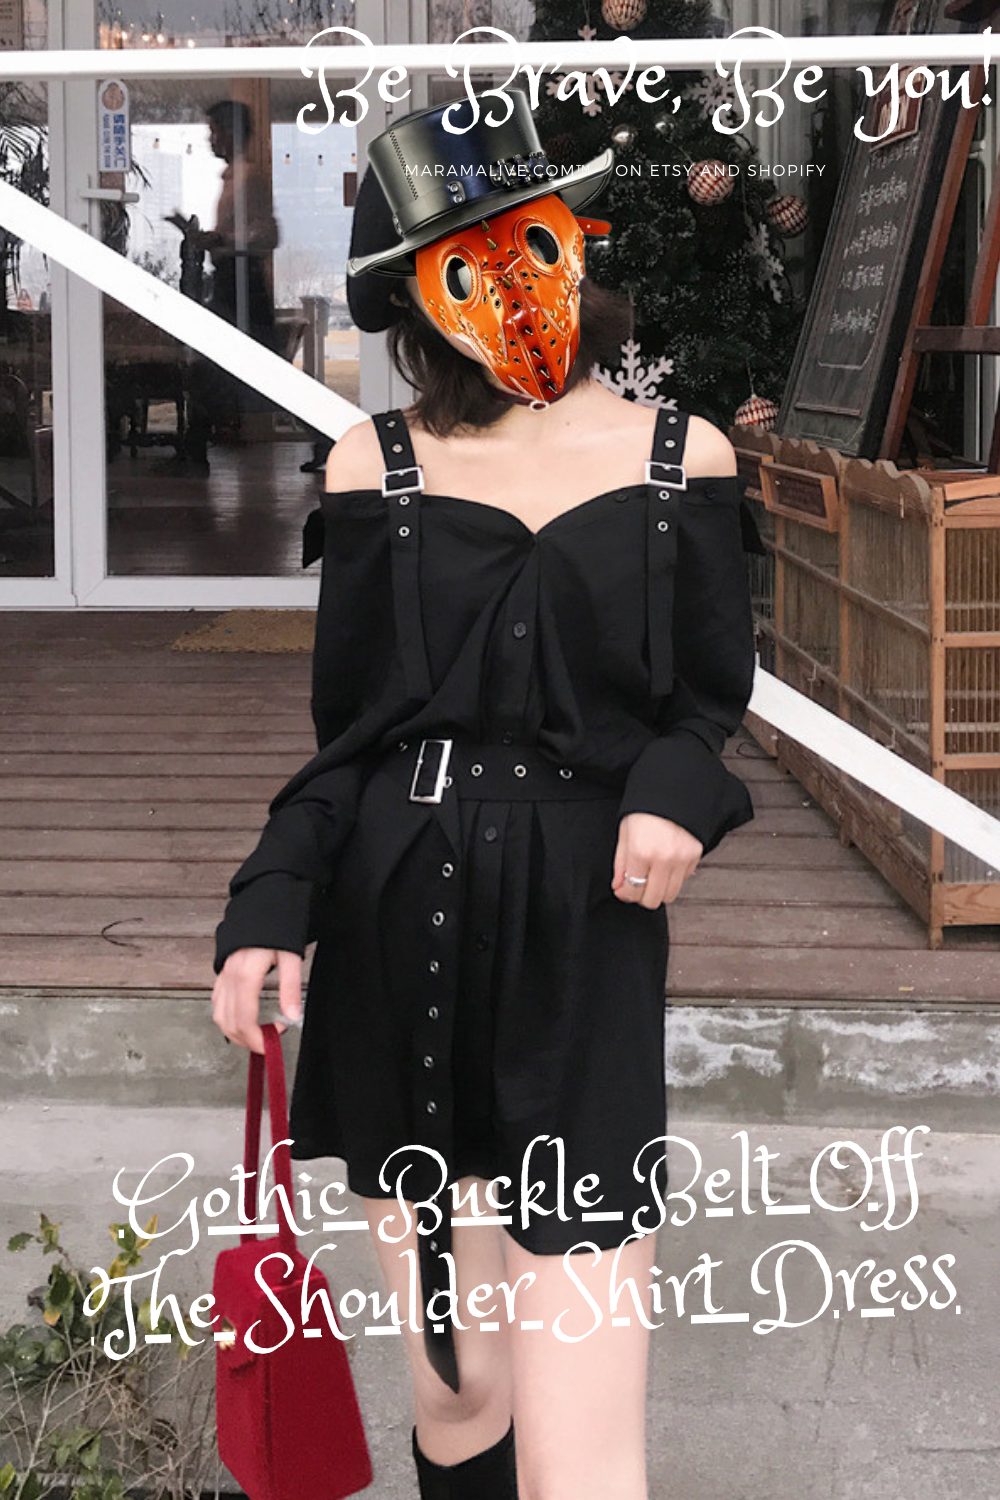 A woman wearing a Maramalive™ Little Black Dress - Unique belts & Straps Cute Minidress with an orange mask.